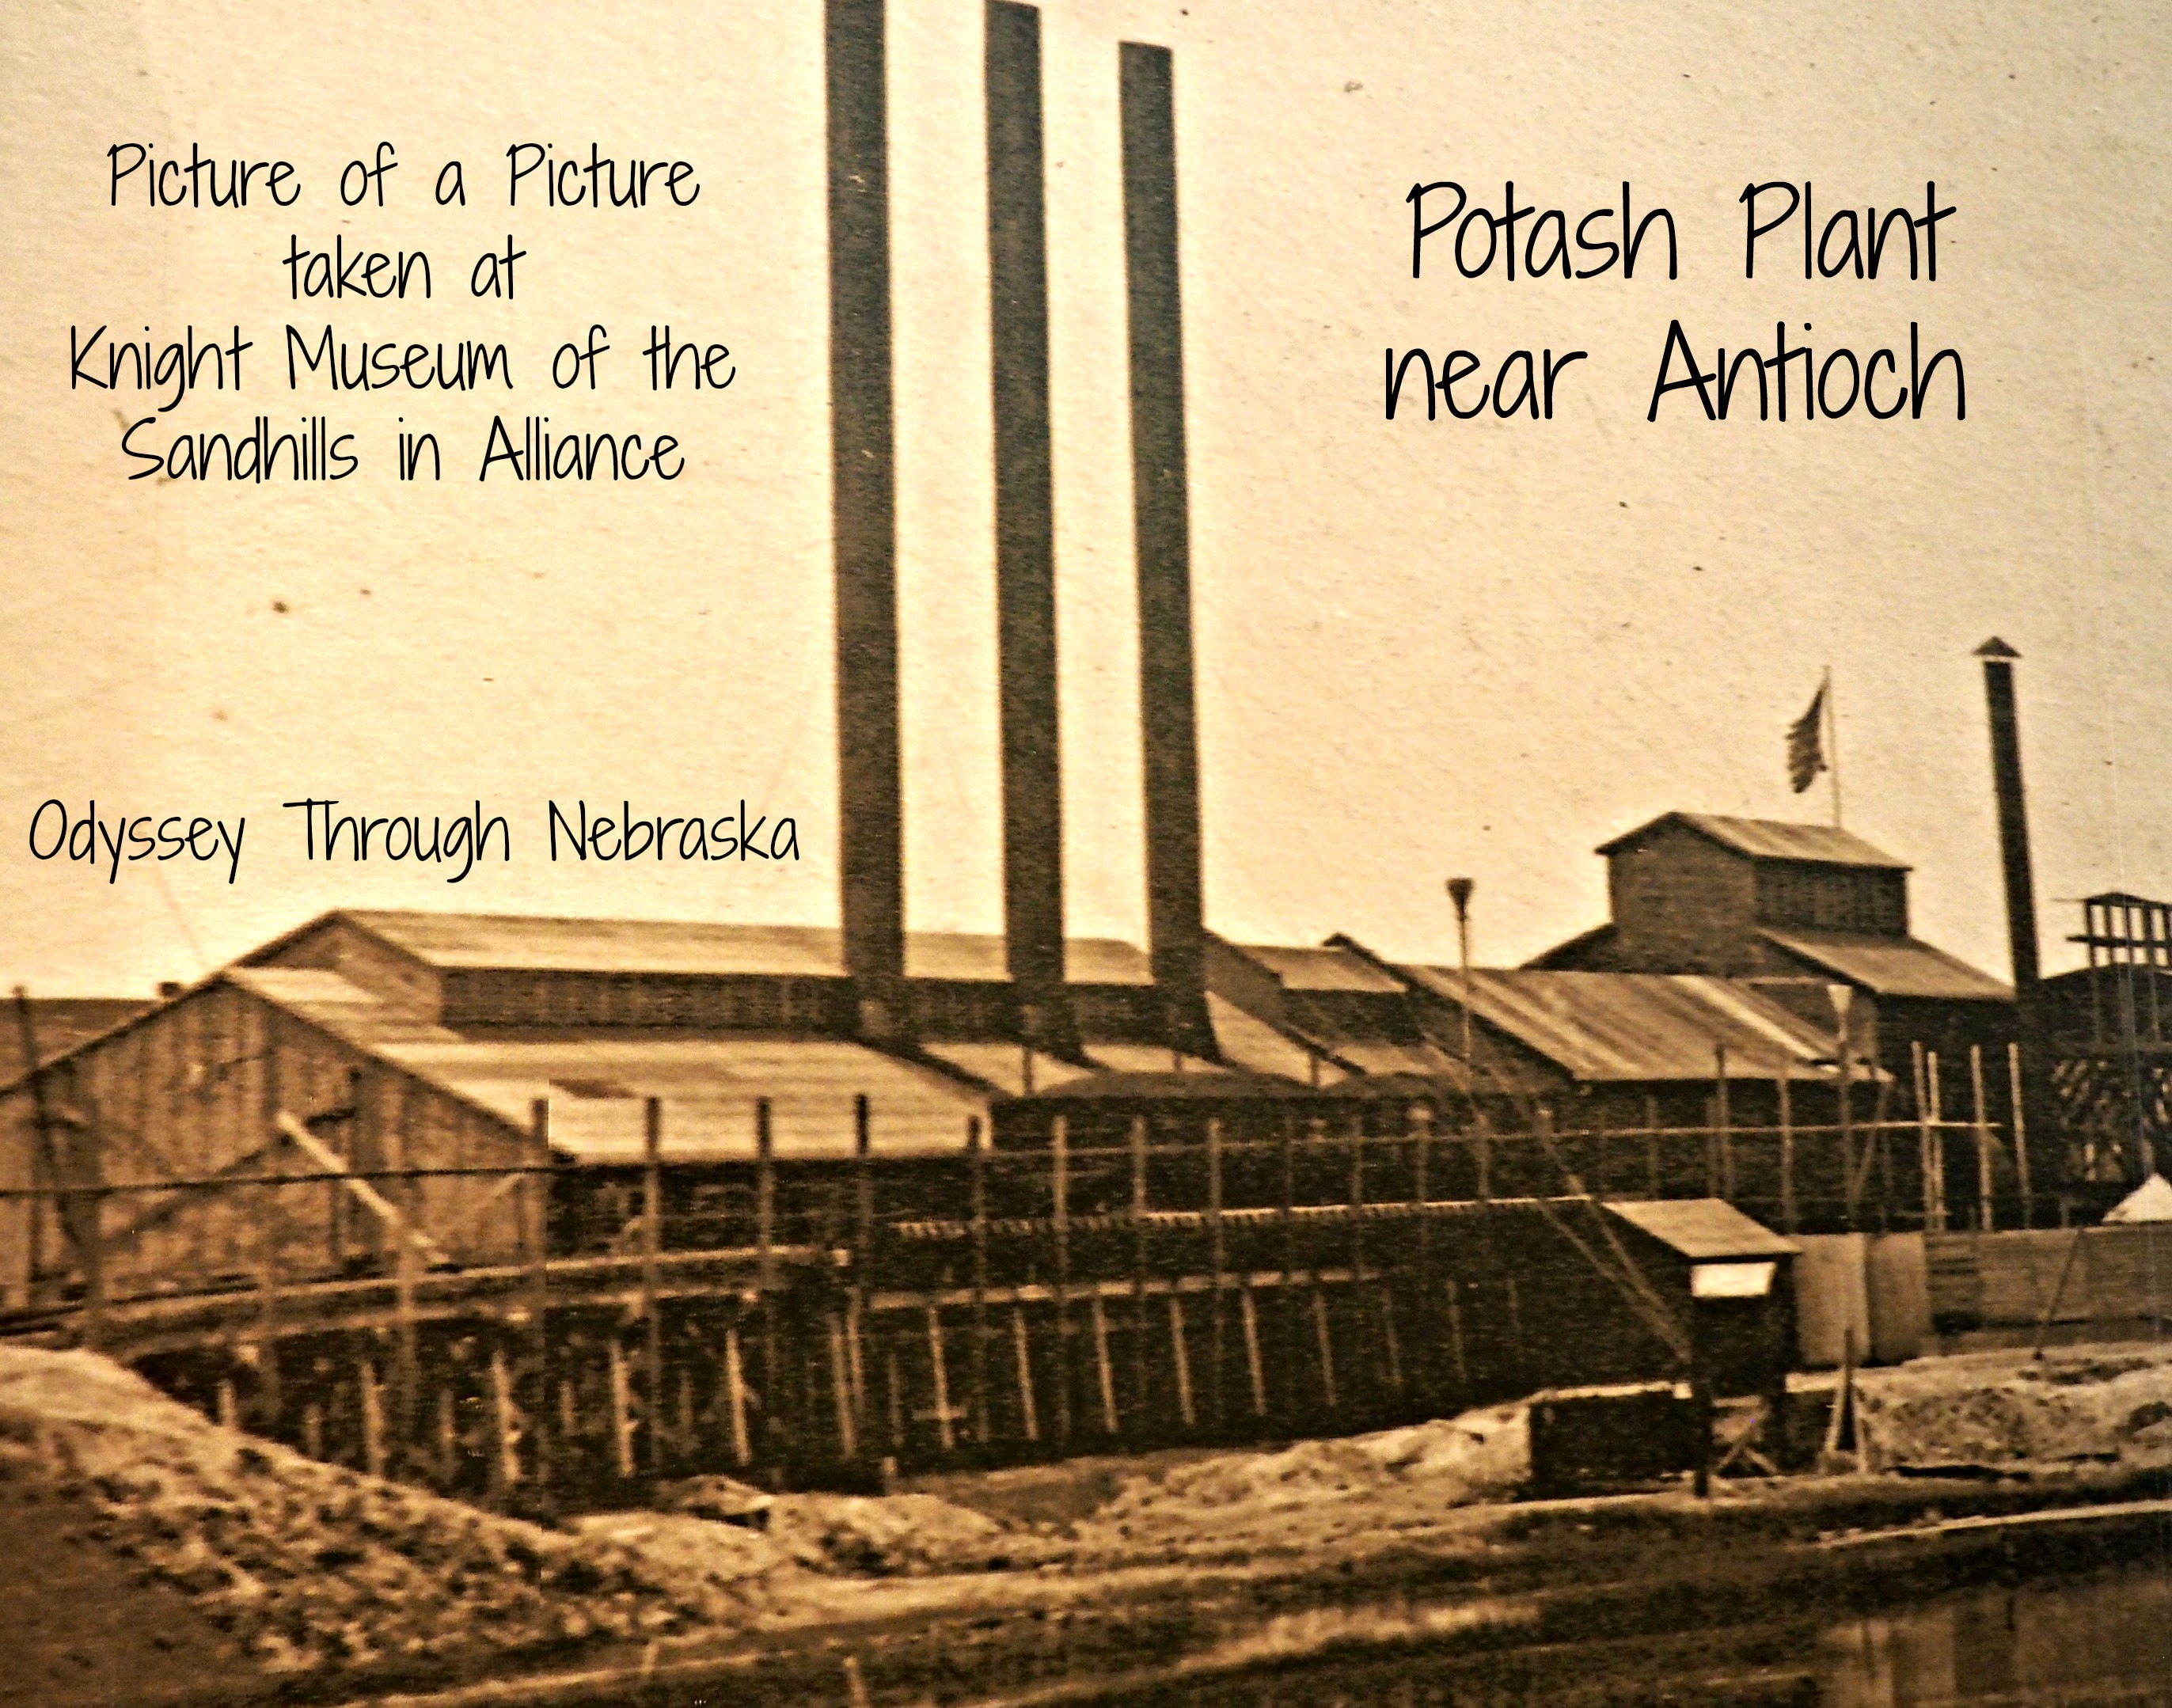 Potash Plant near Antioch